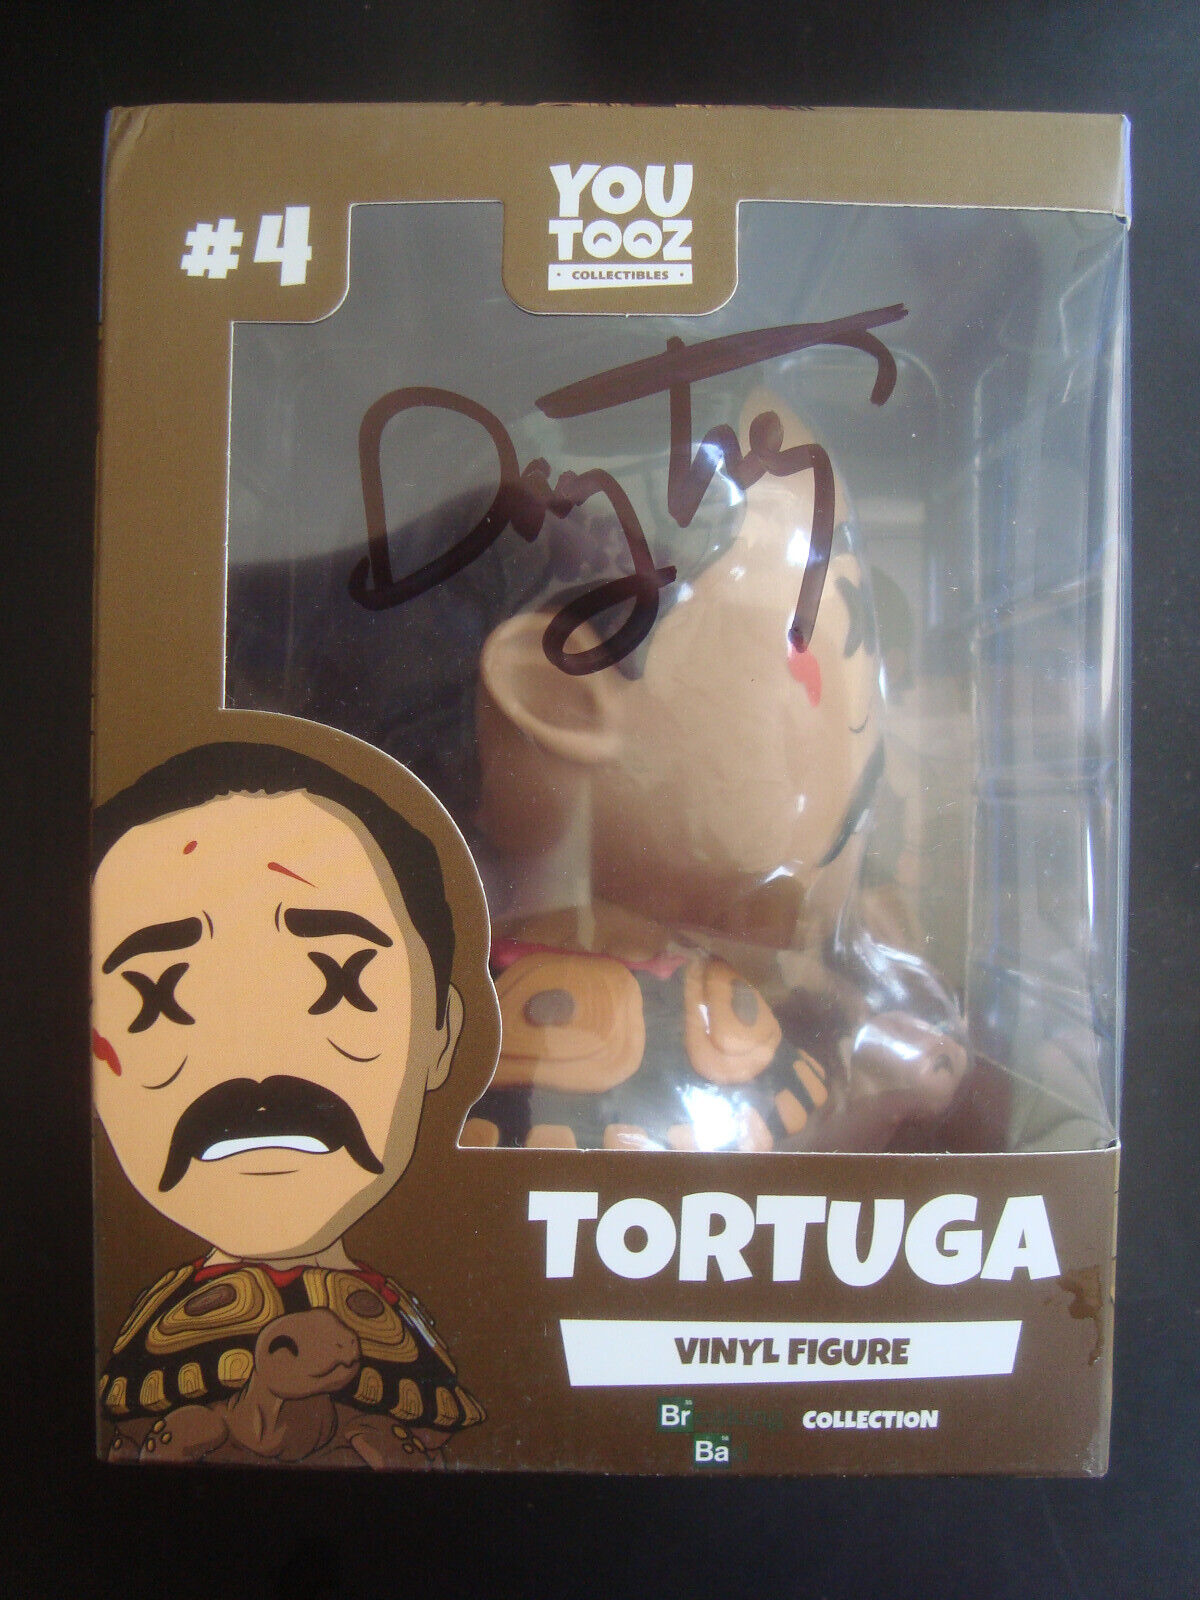  Breaking Bad Tortuga Youtooz vinyl figure signed by Danny Trejo